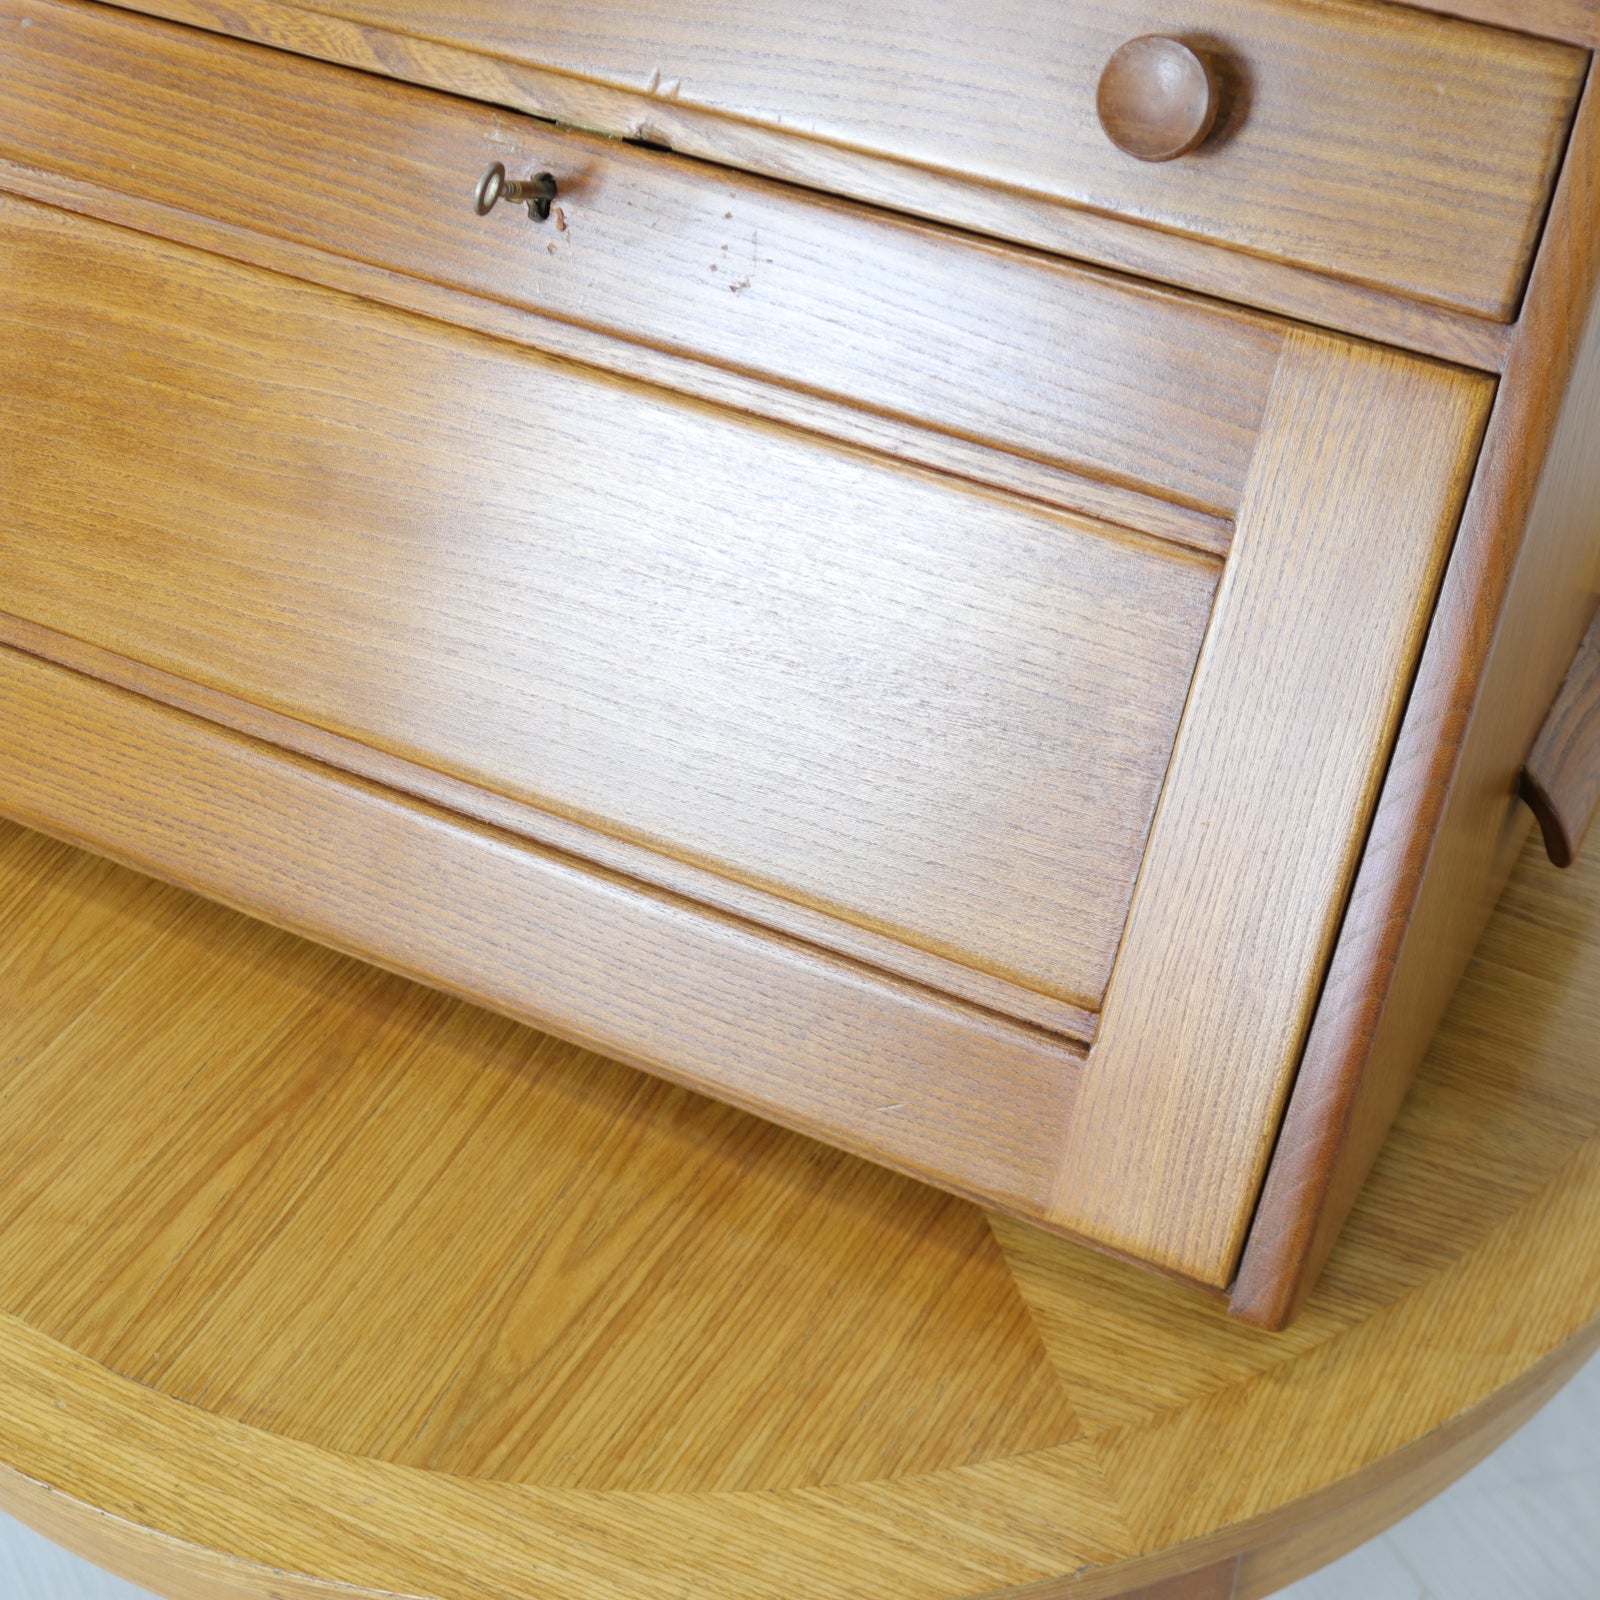 Rare Ercol Compact Desk Top Bureau Blonde Finish - teakyfinders